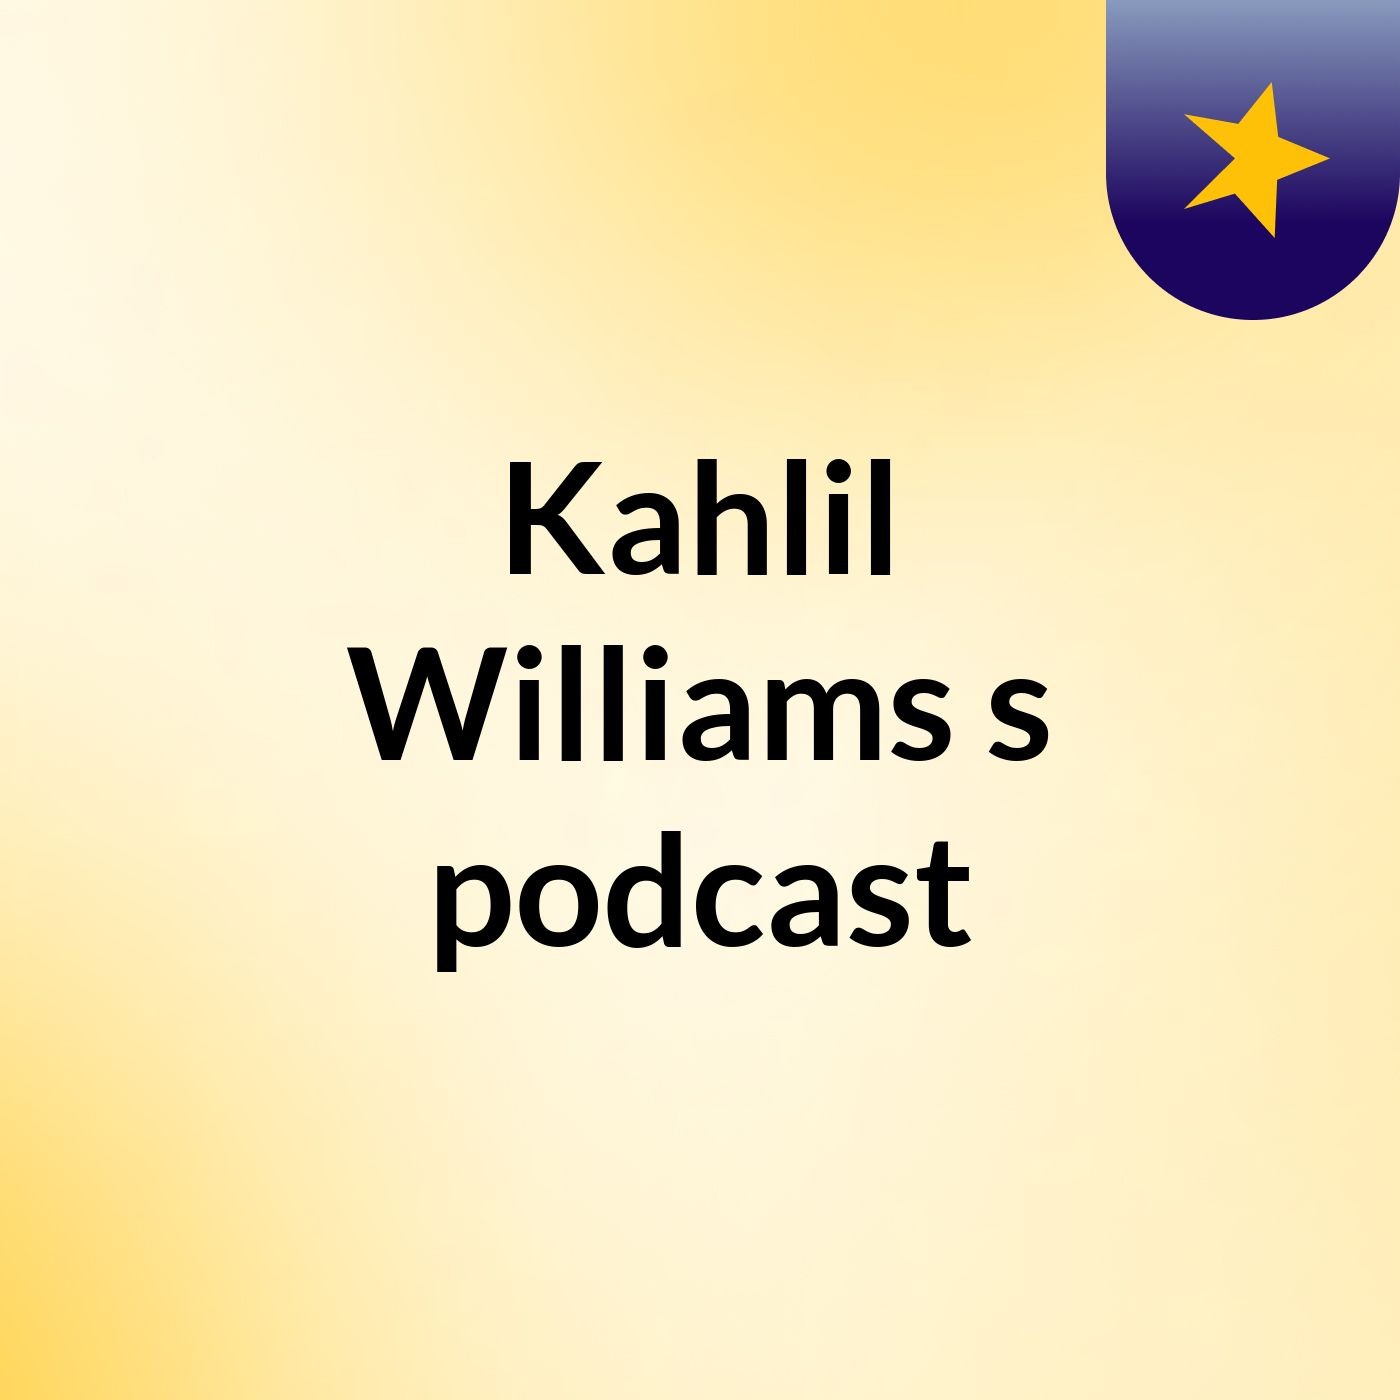 Kahlil Williams's podcast